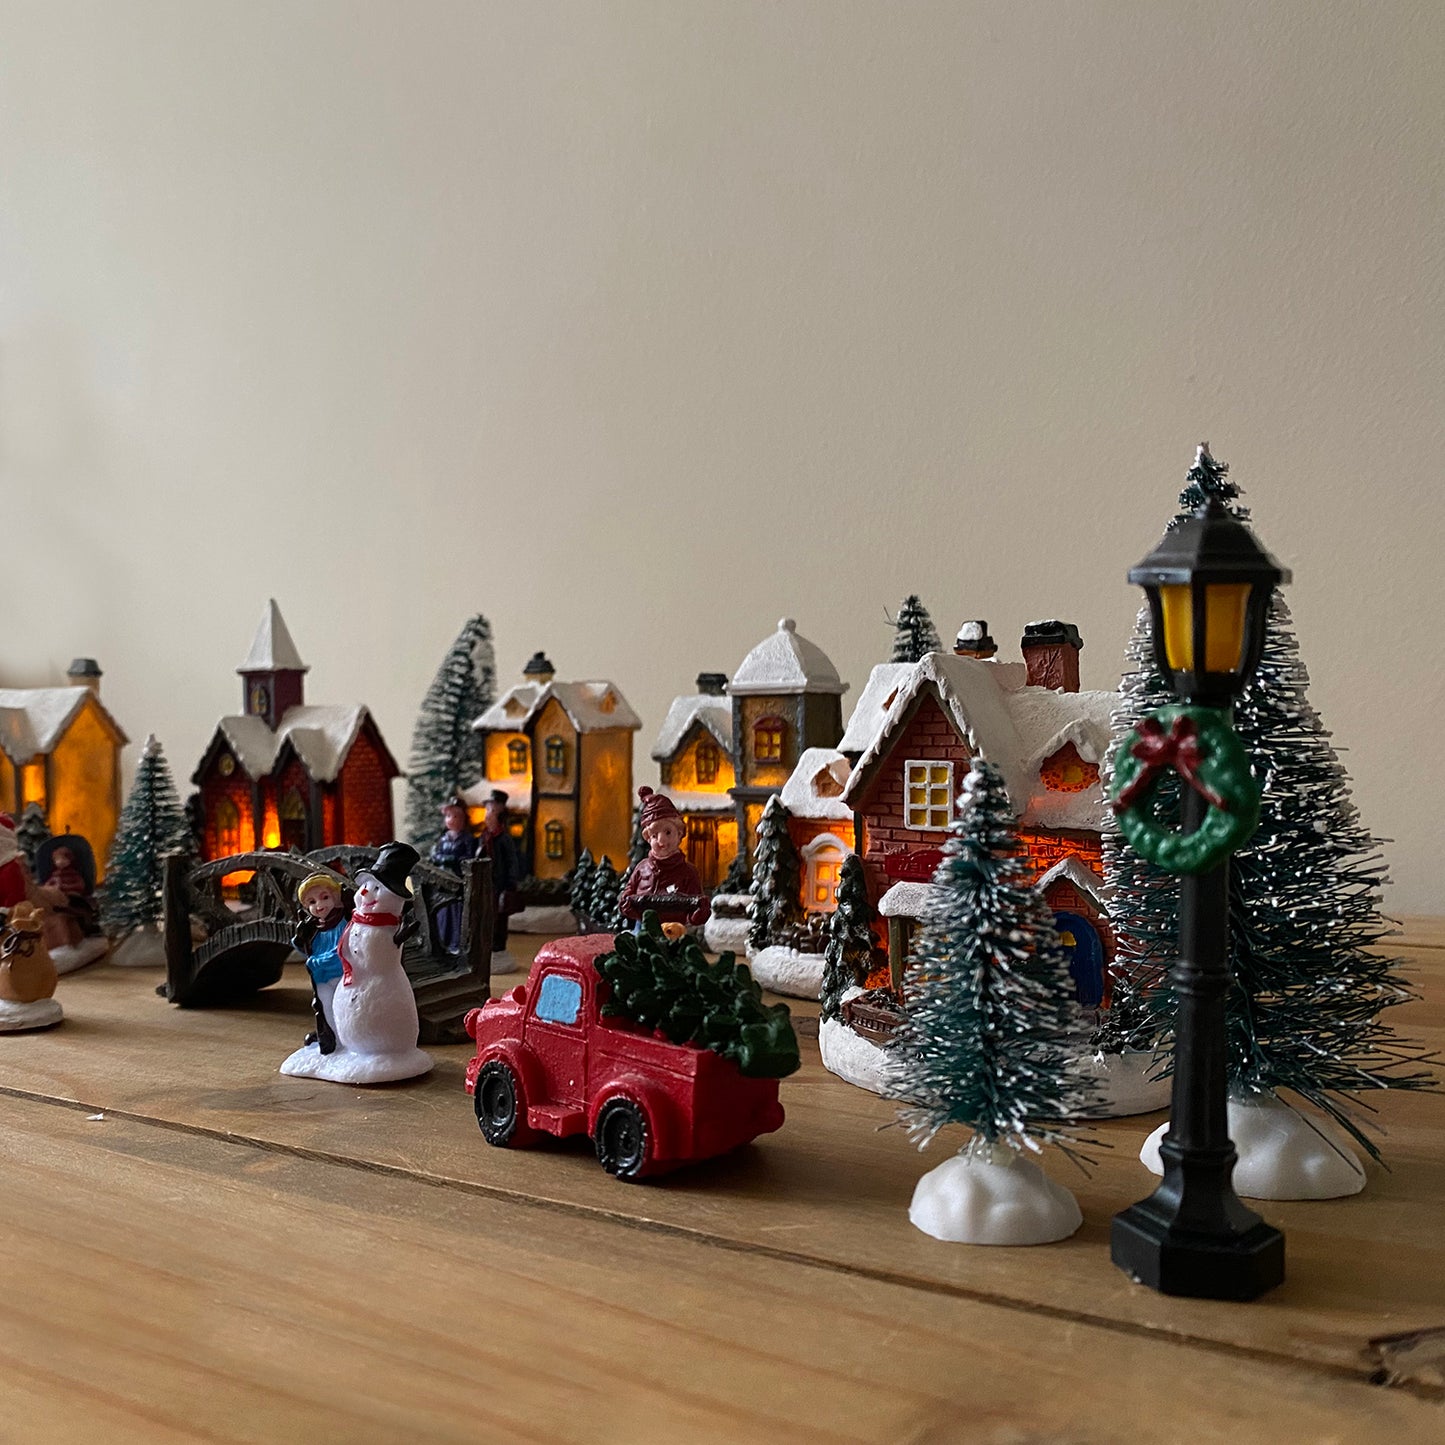 24 Piece Christmas Village Scene For Windowsills Or Mantelpieces